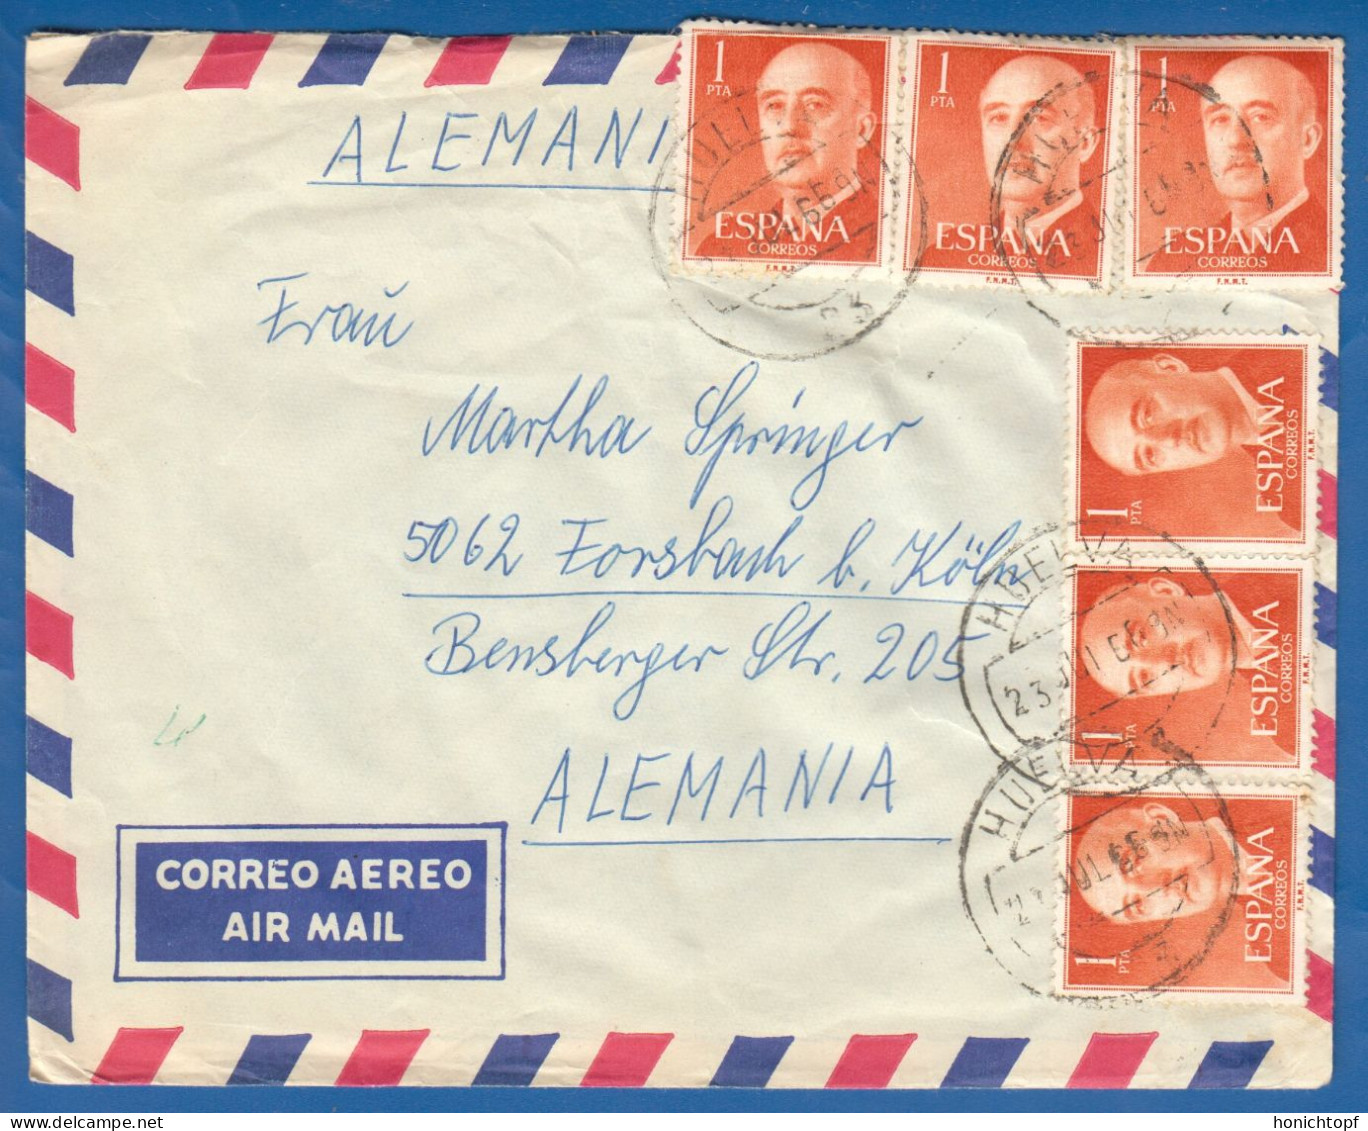 Spanien; Correo Aereo; 1966; Cover / Letter Huelva To Germany - Covers & Documents